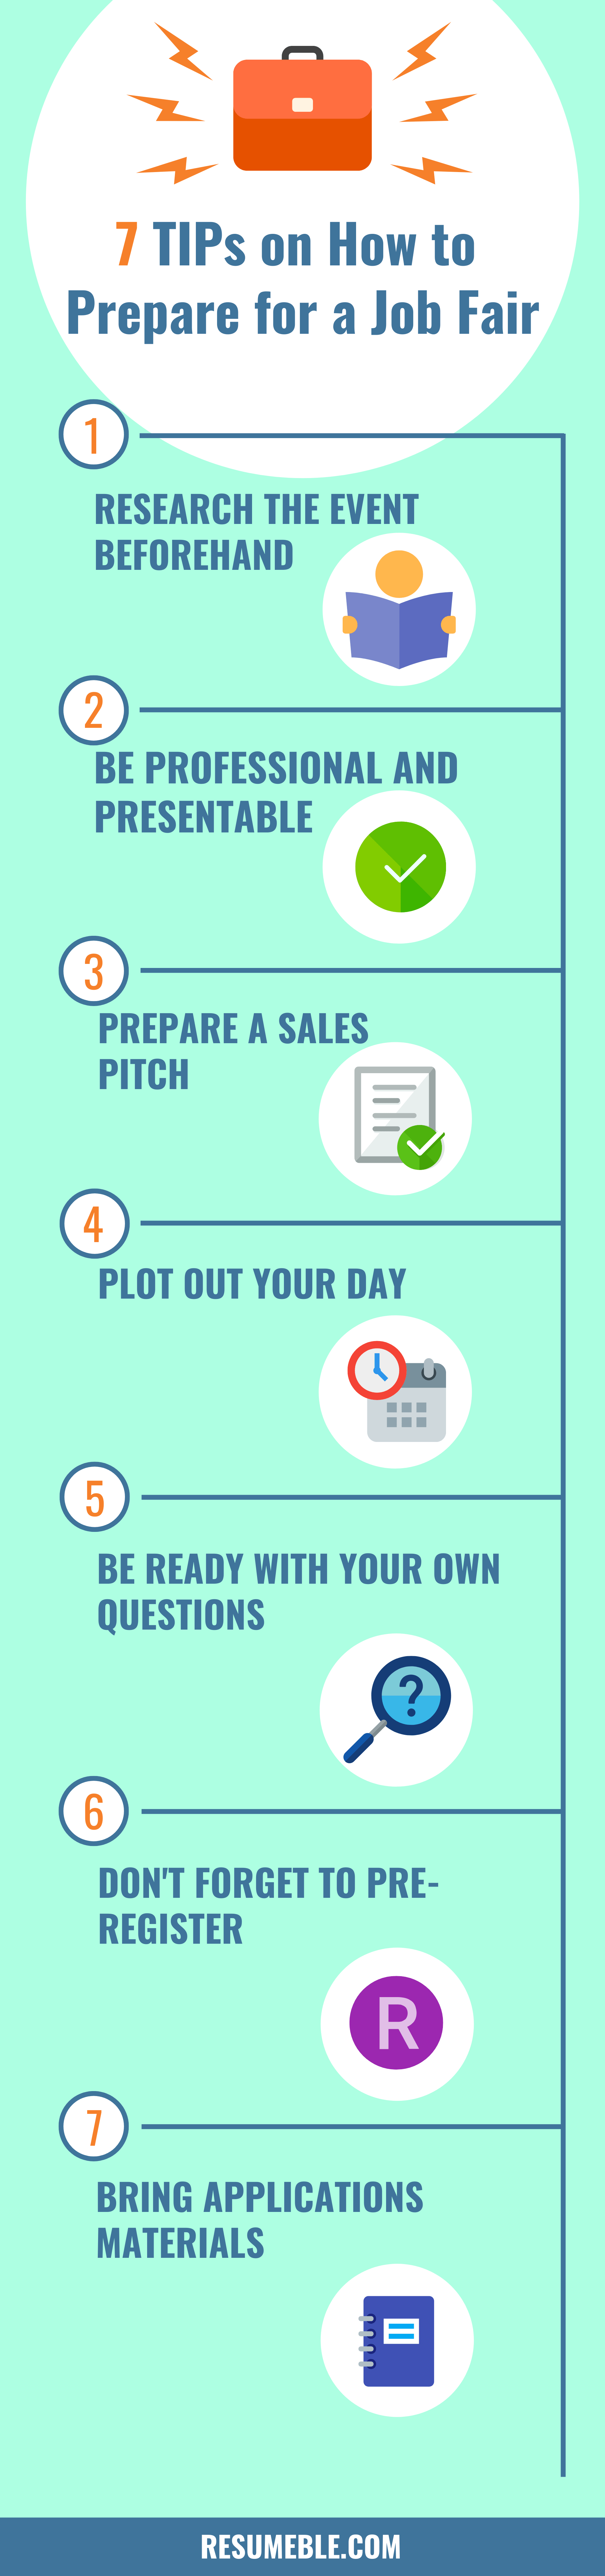 how to prepare for a job fair